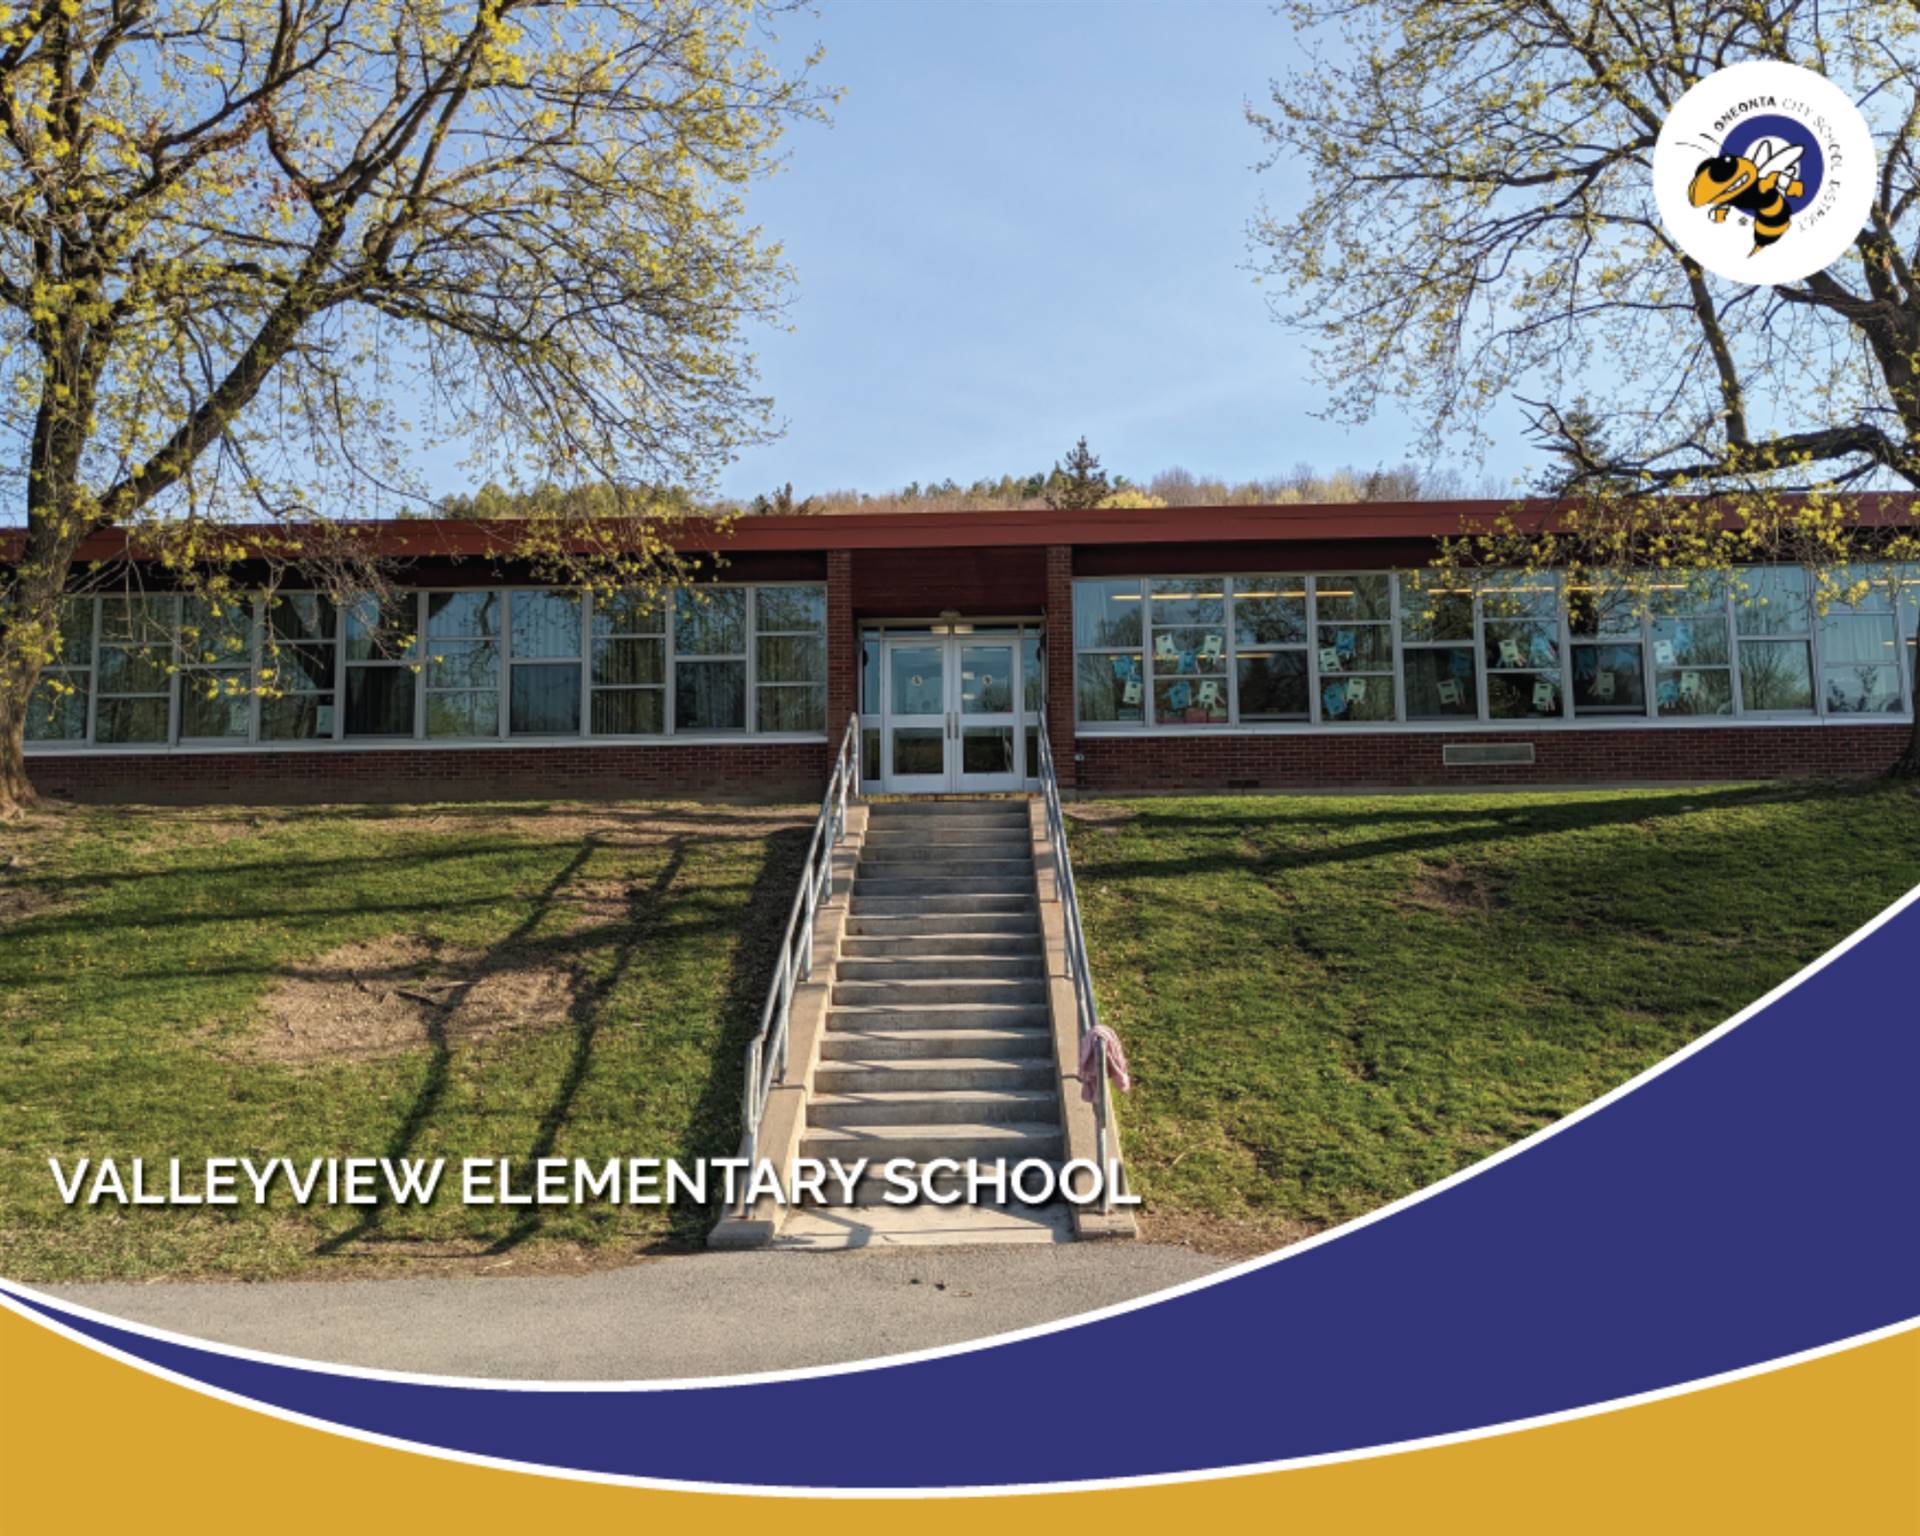 Photo of Valleyview Elementary School Building